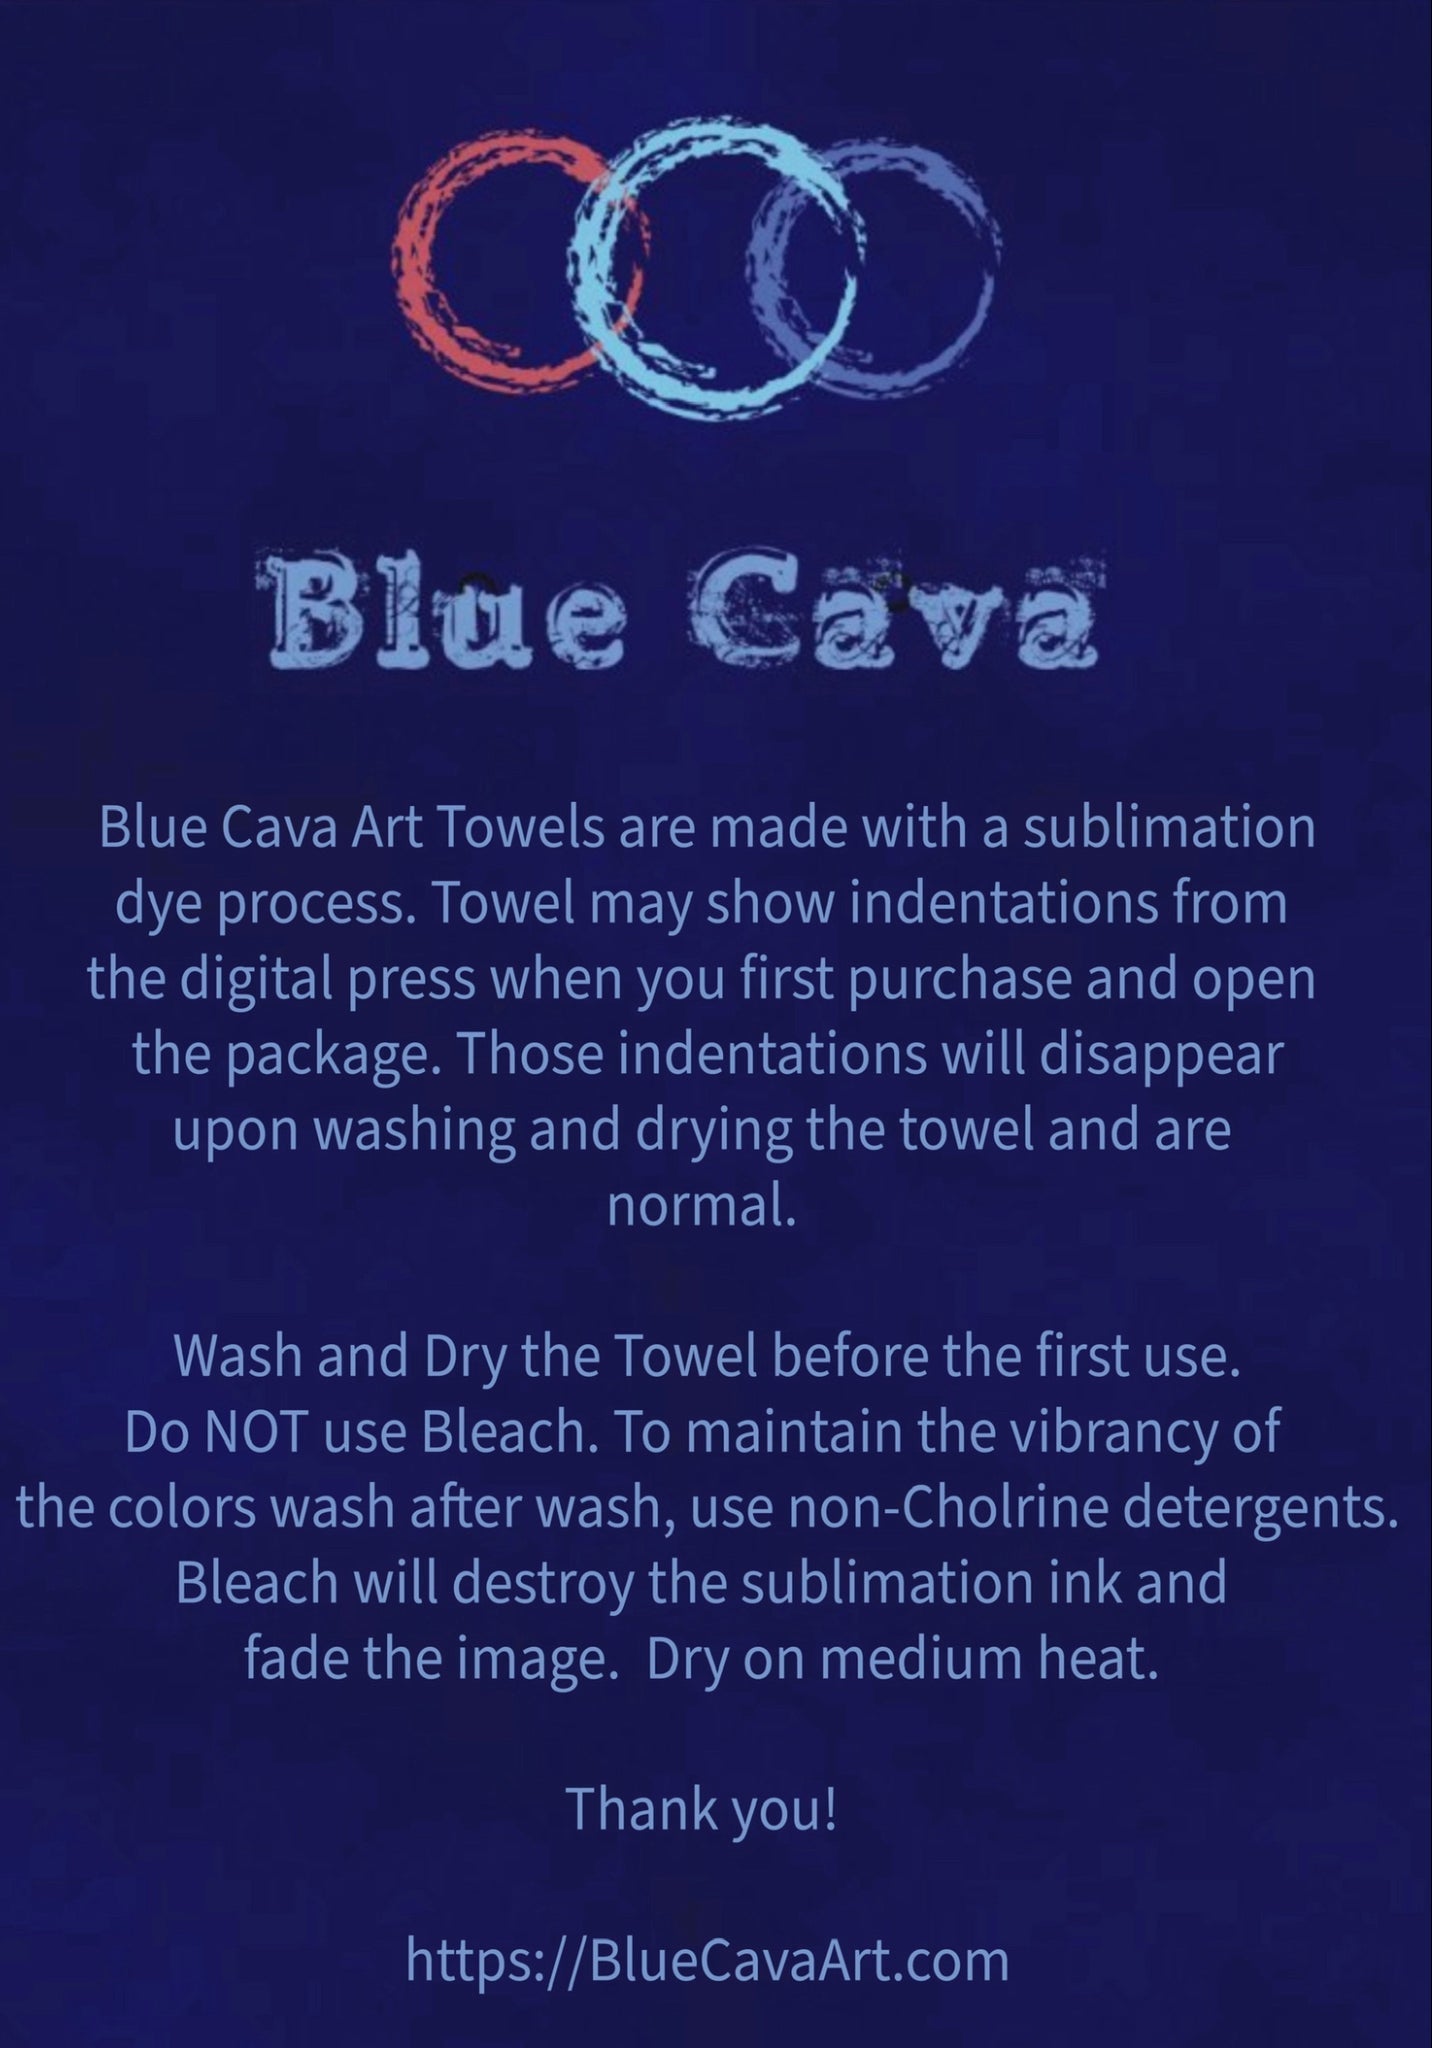 Floral Cross Microfiber Waffle Towel - Blue Cava